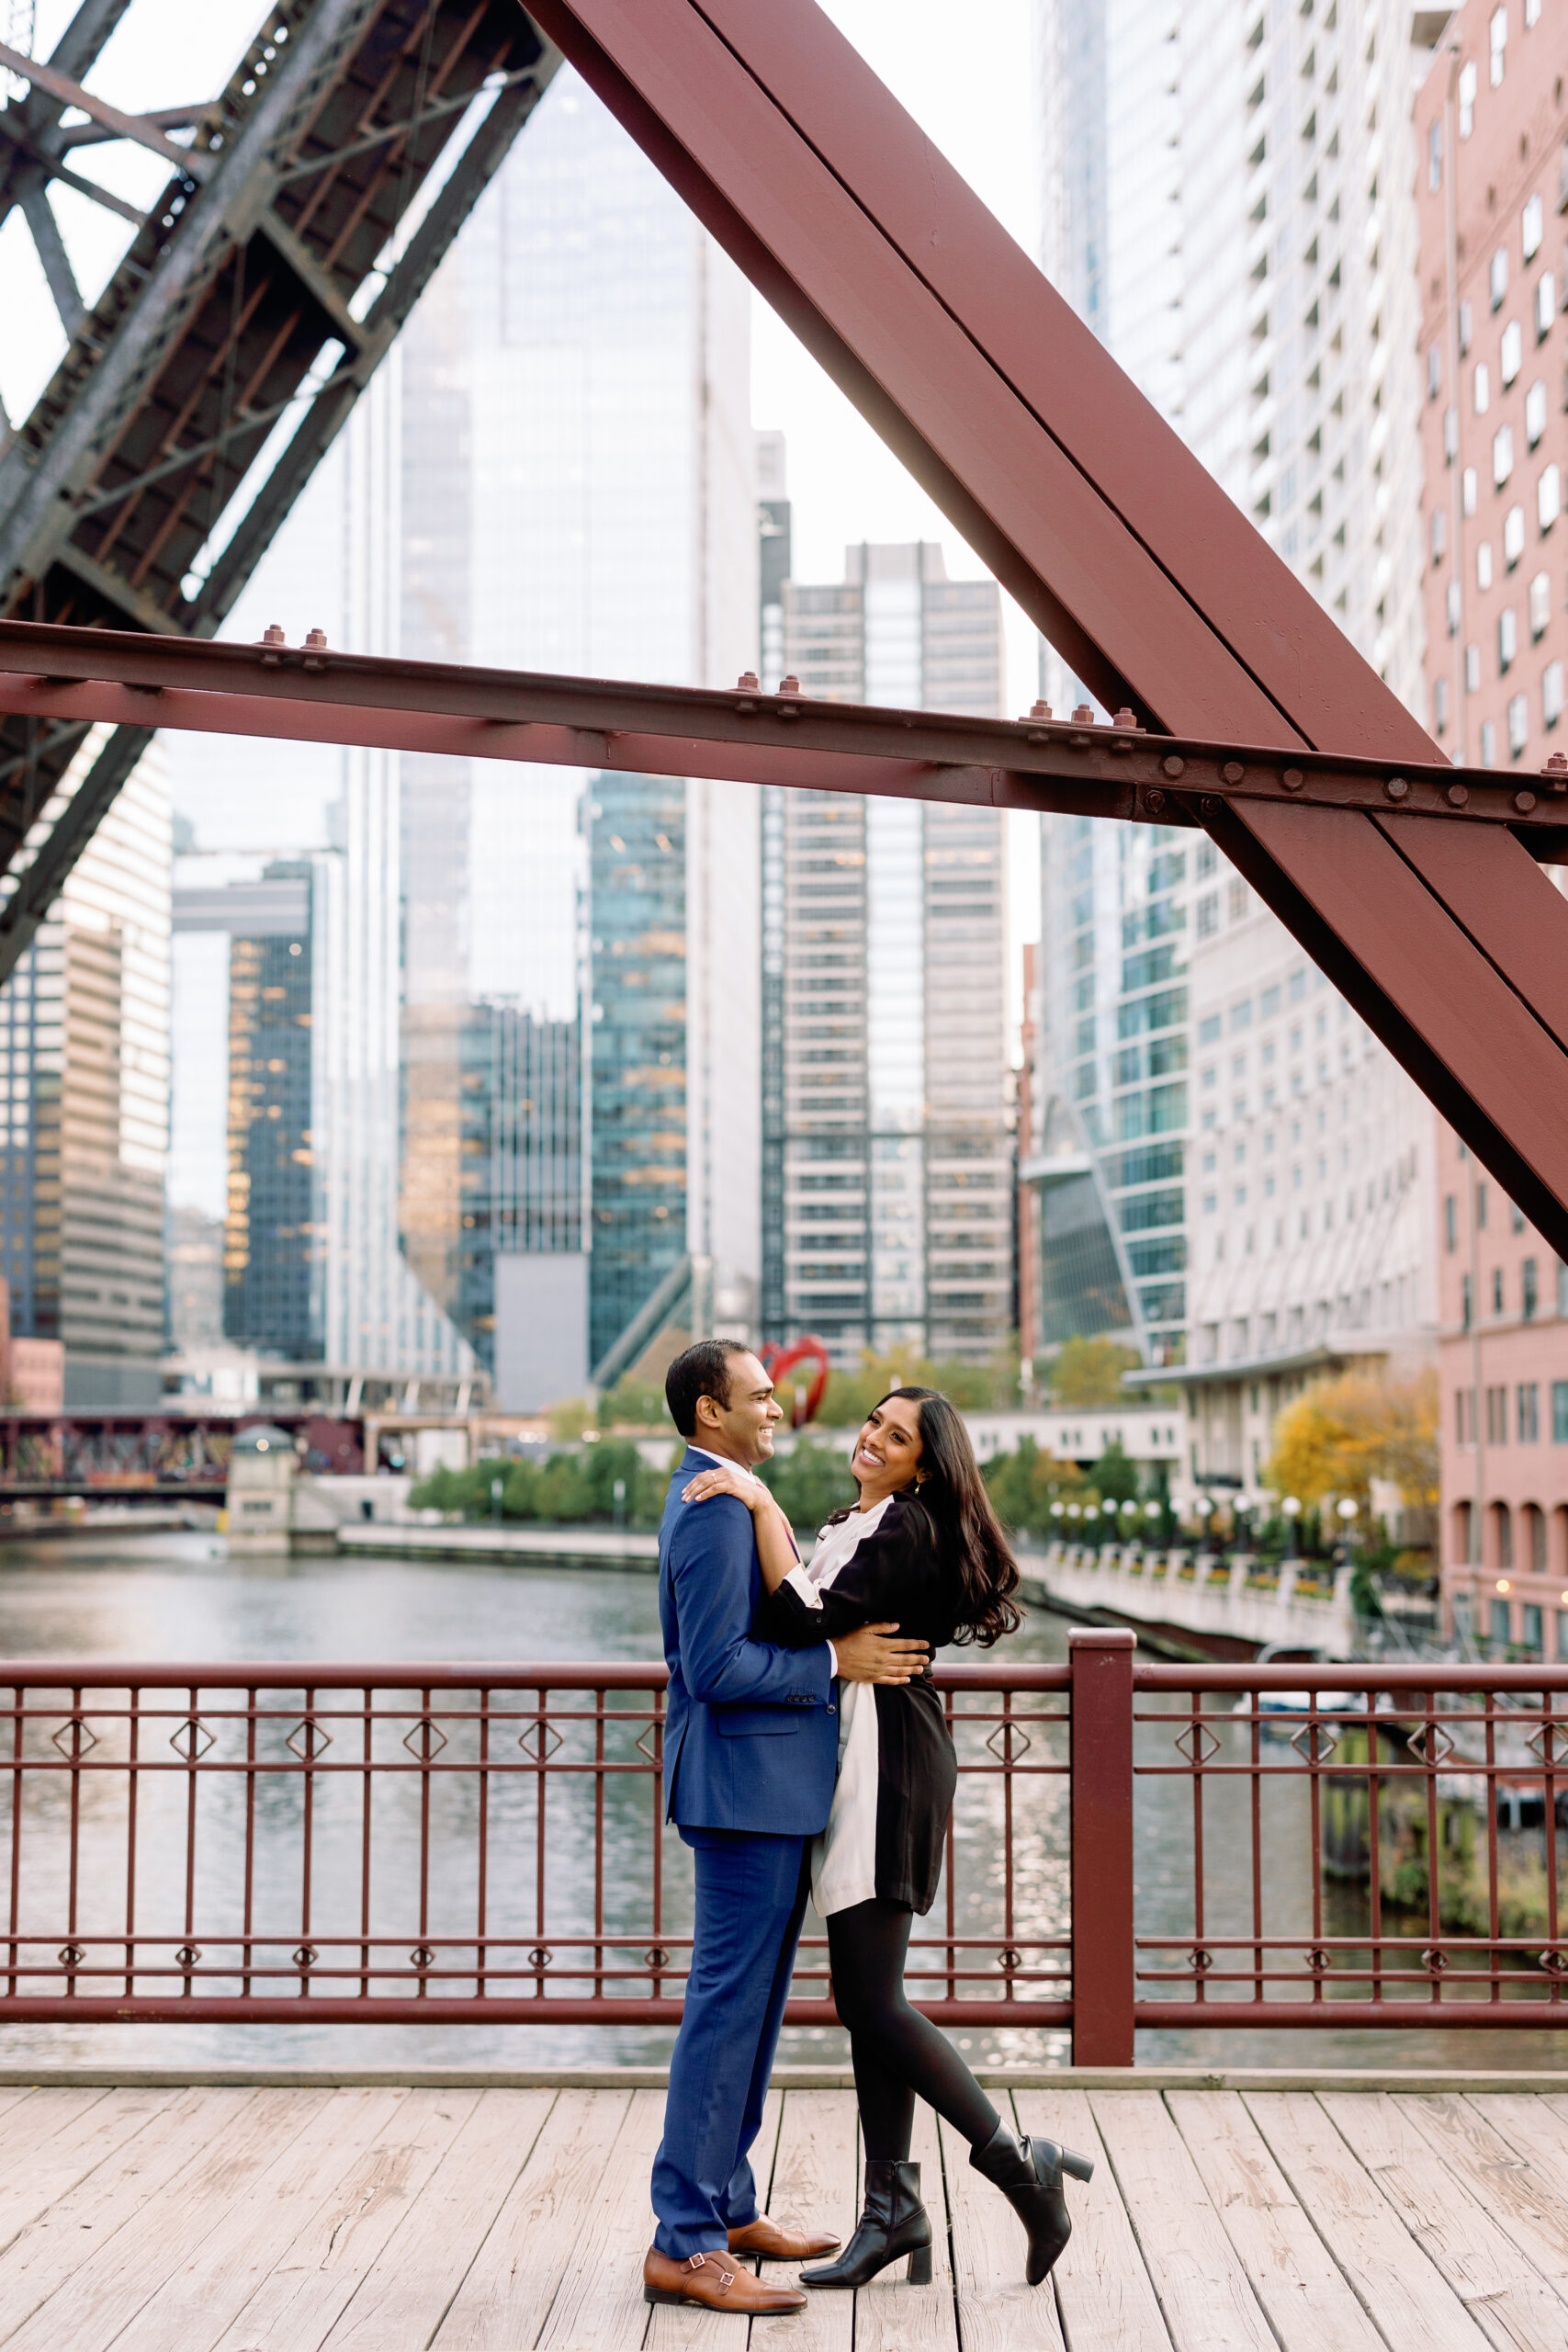 An engagement photo taken on the Kinzie Street Bridge in Chicago.